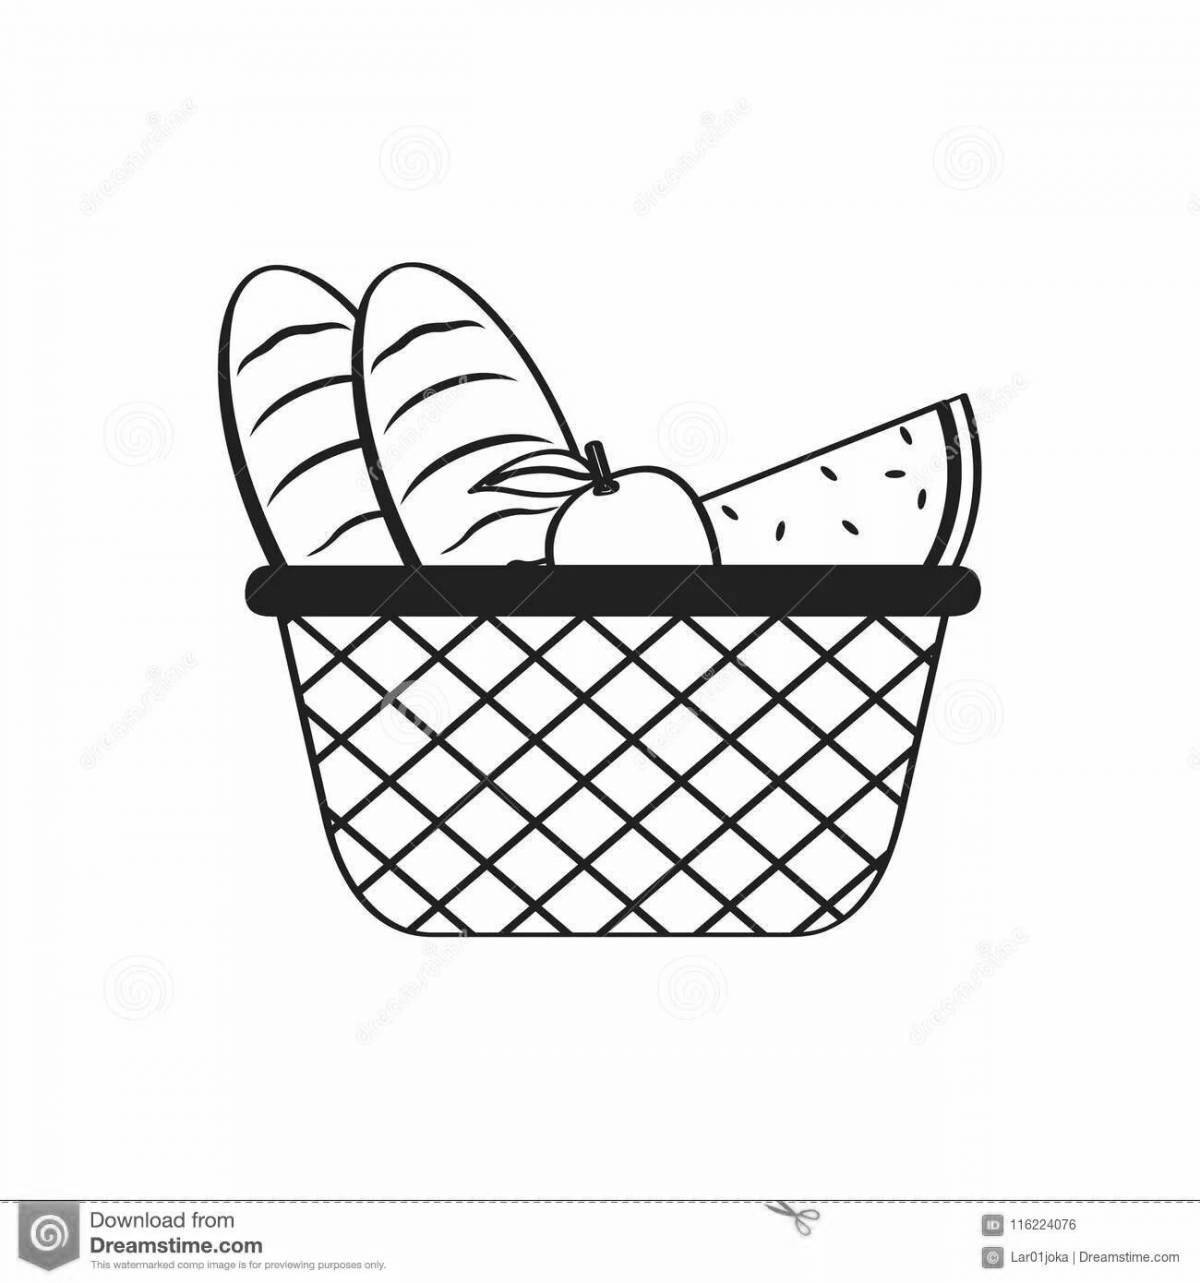 Living picnic basket with food